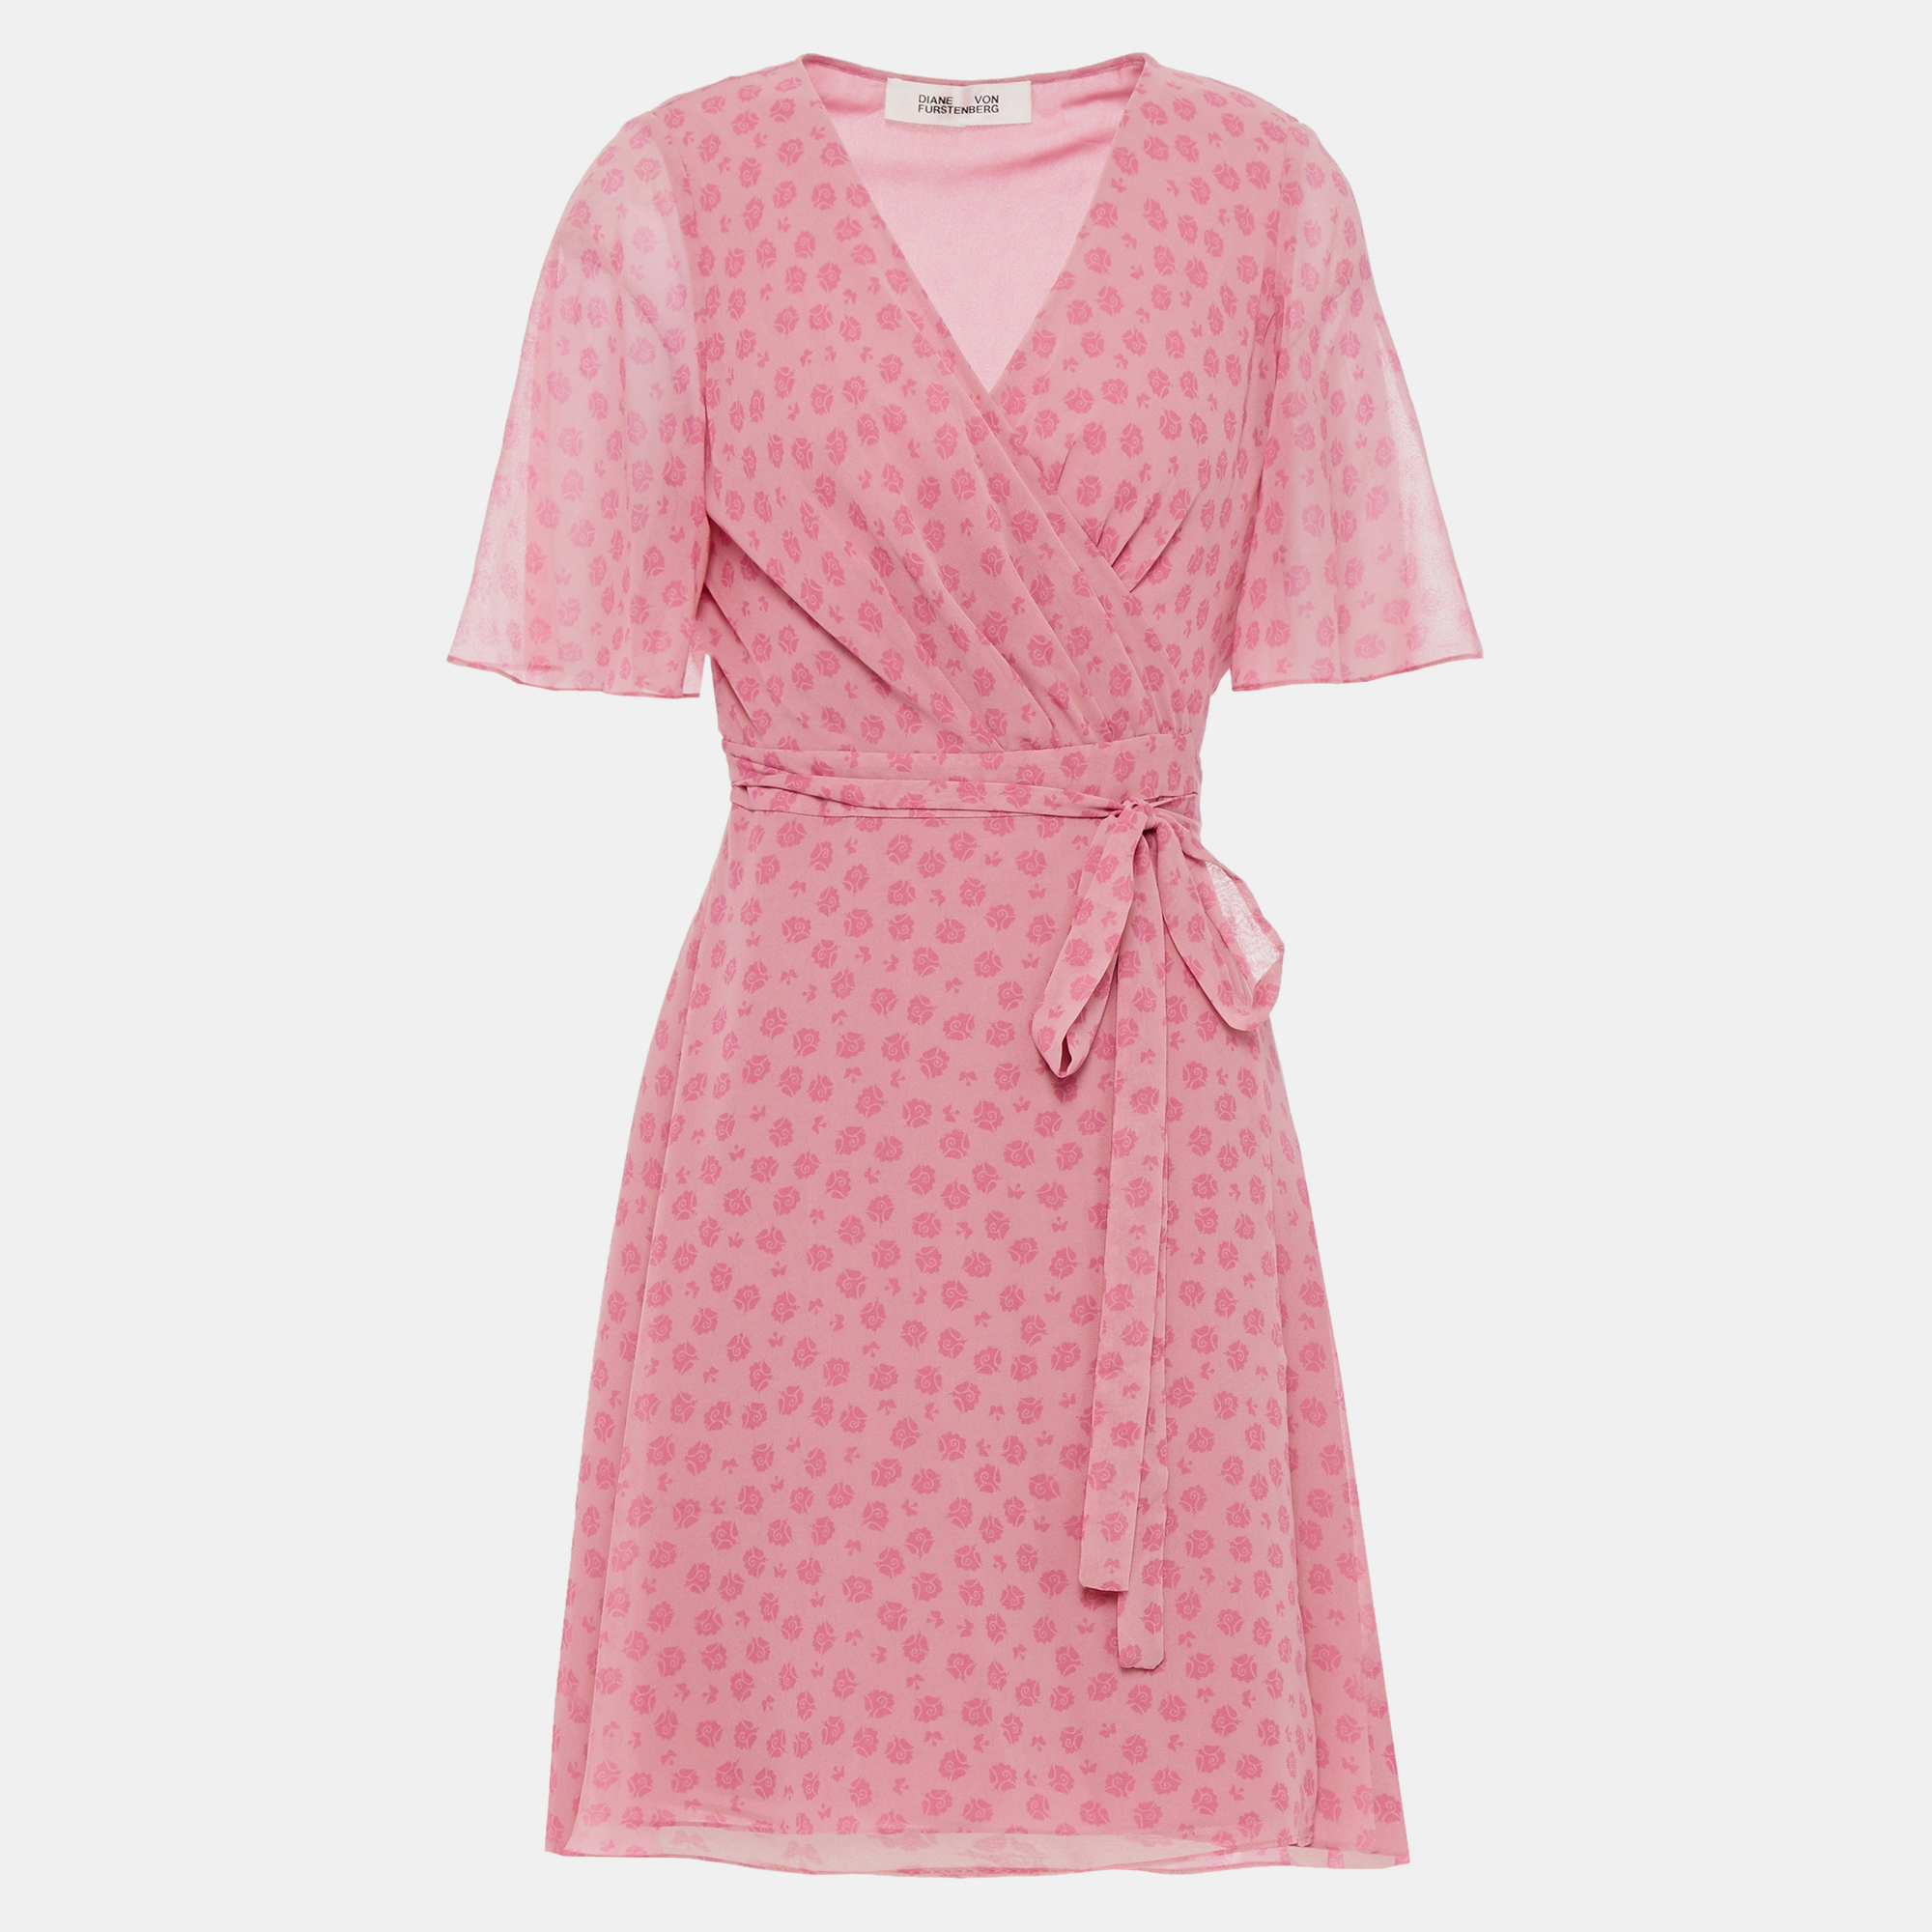 Diane von furstenberg pink rose print chiffon kathy wrap dress l (us 8)